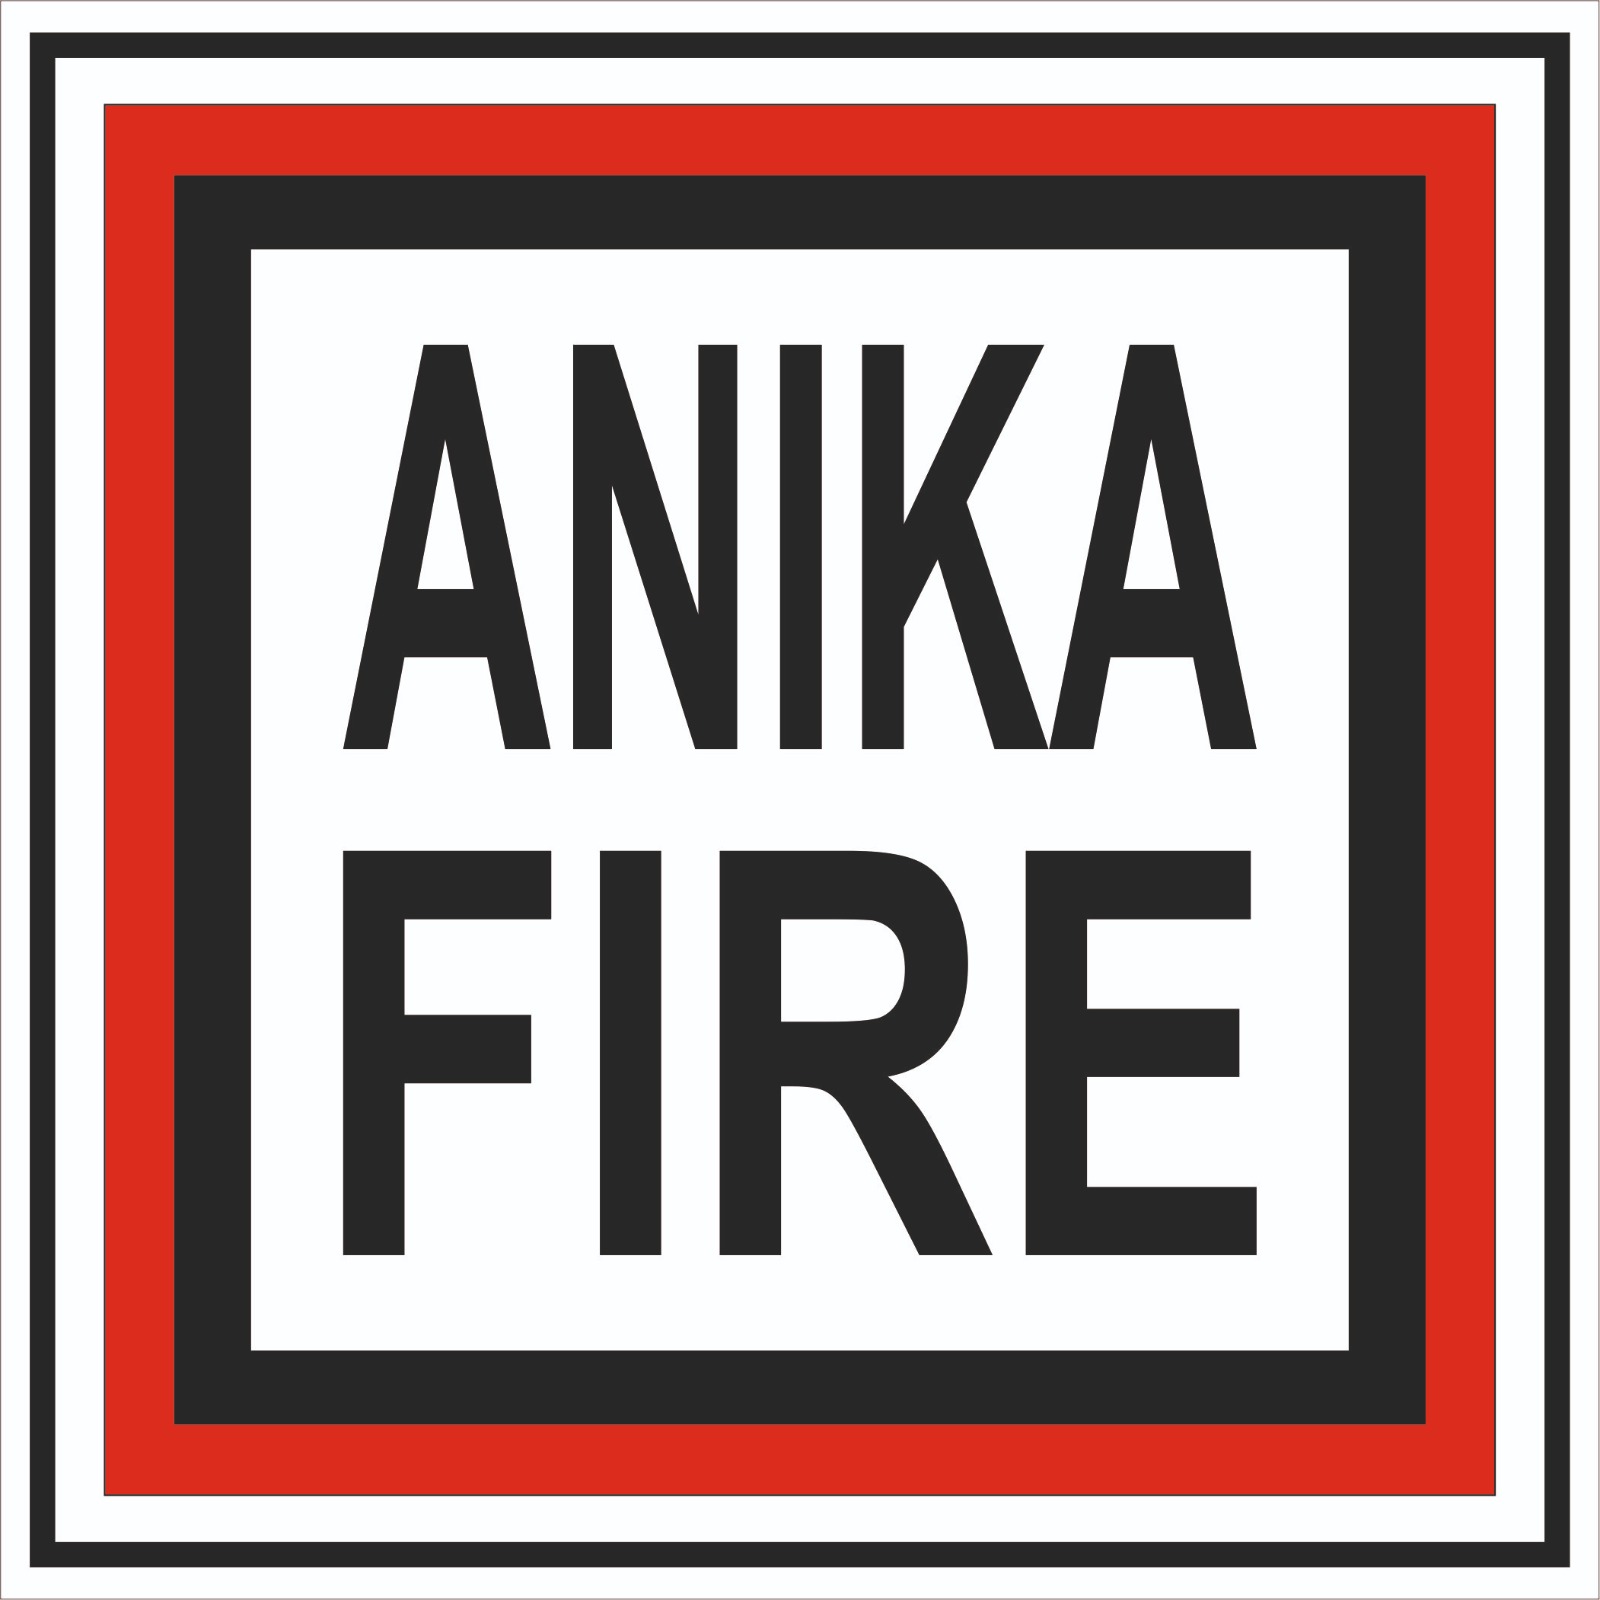 Anika FireTech Pvt. Ltd.